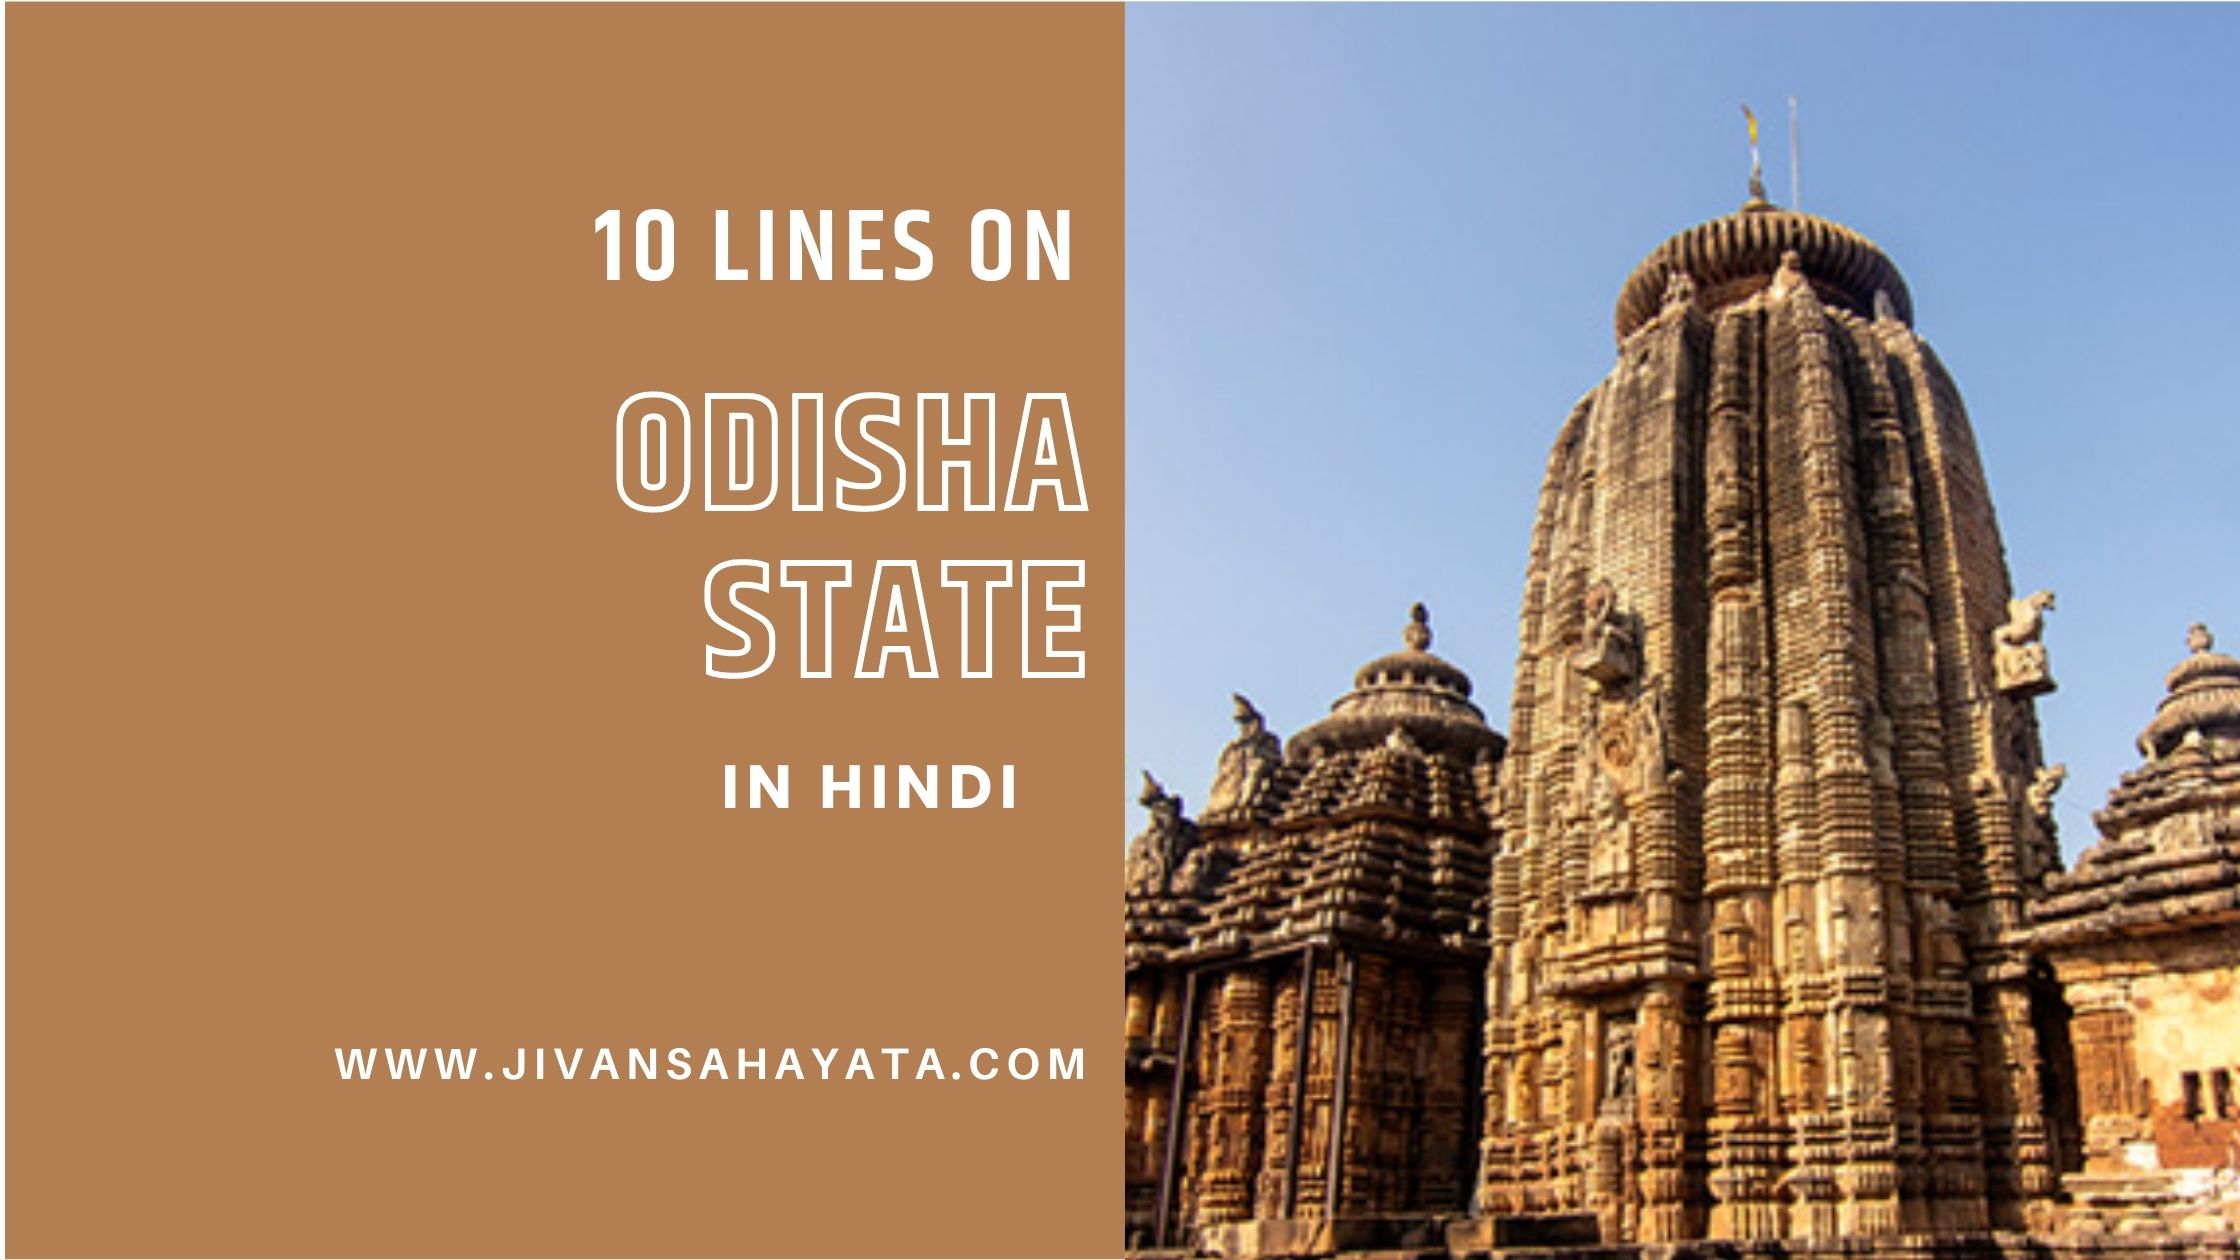 10 lines on Odisha State in Hindi